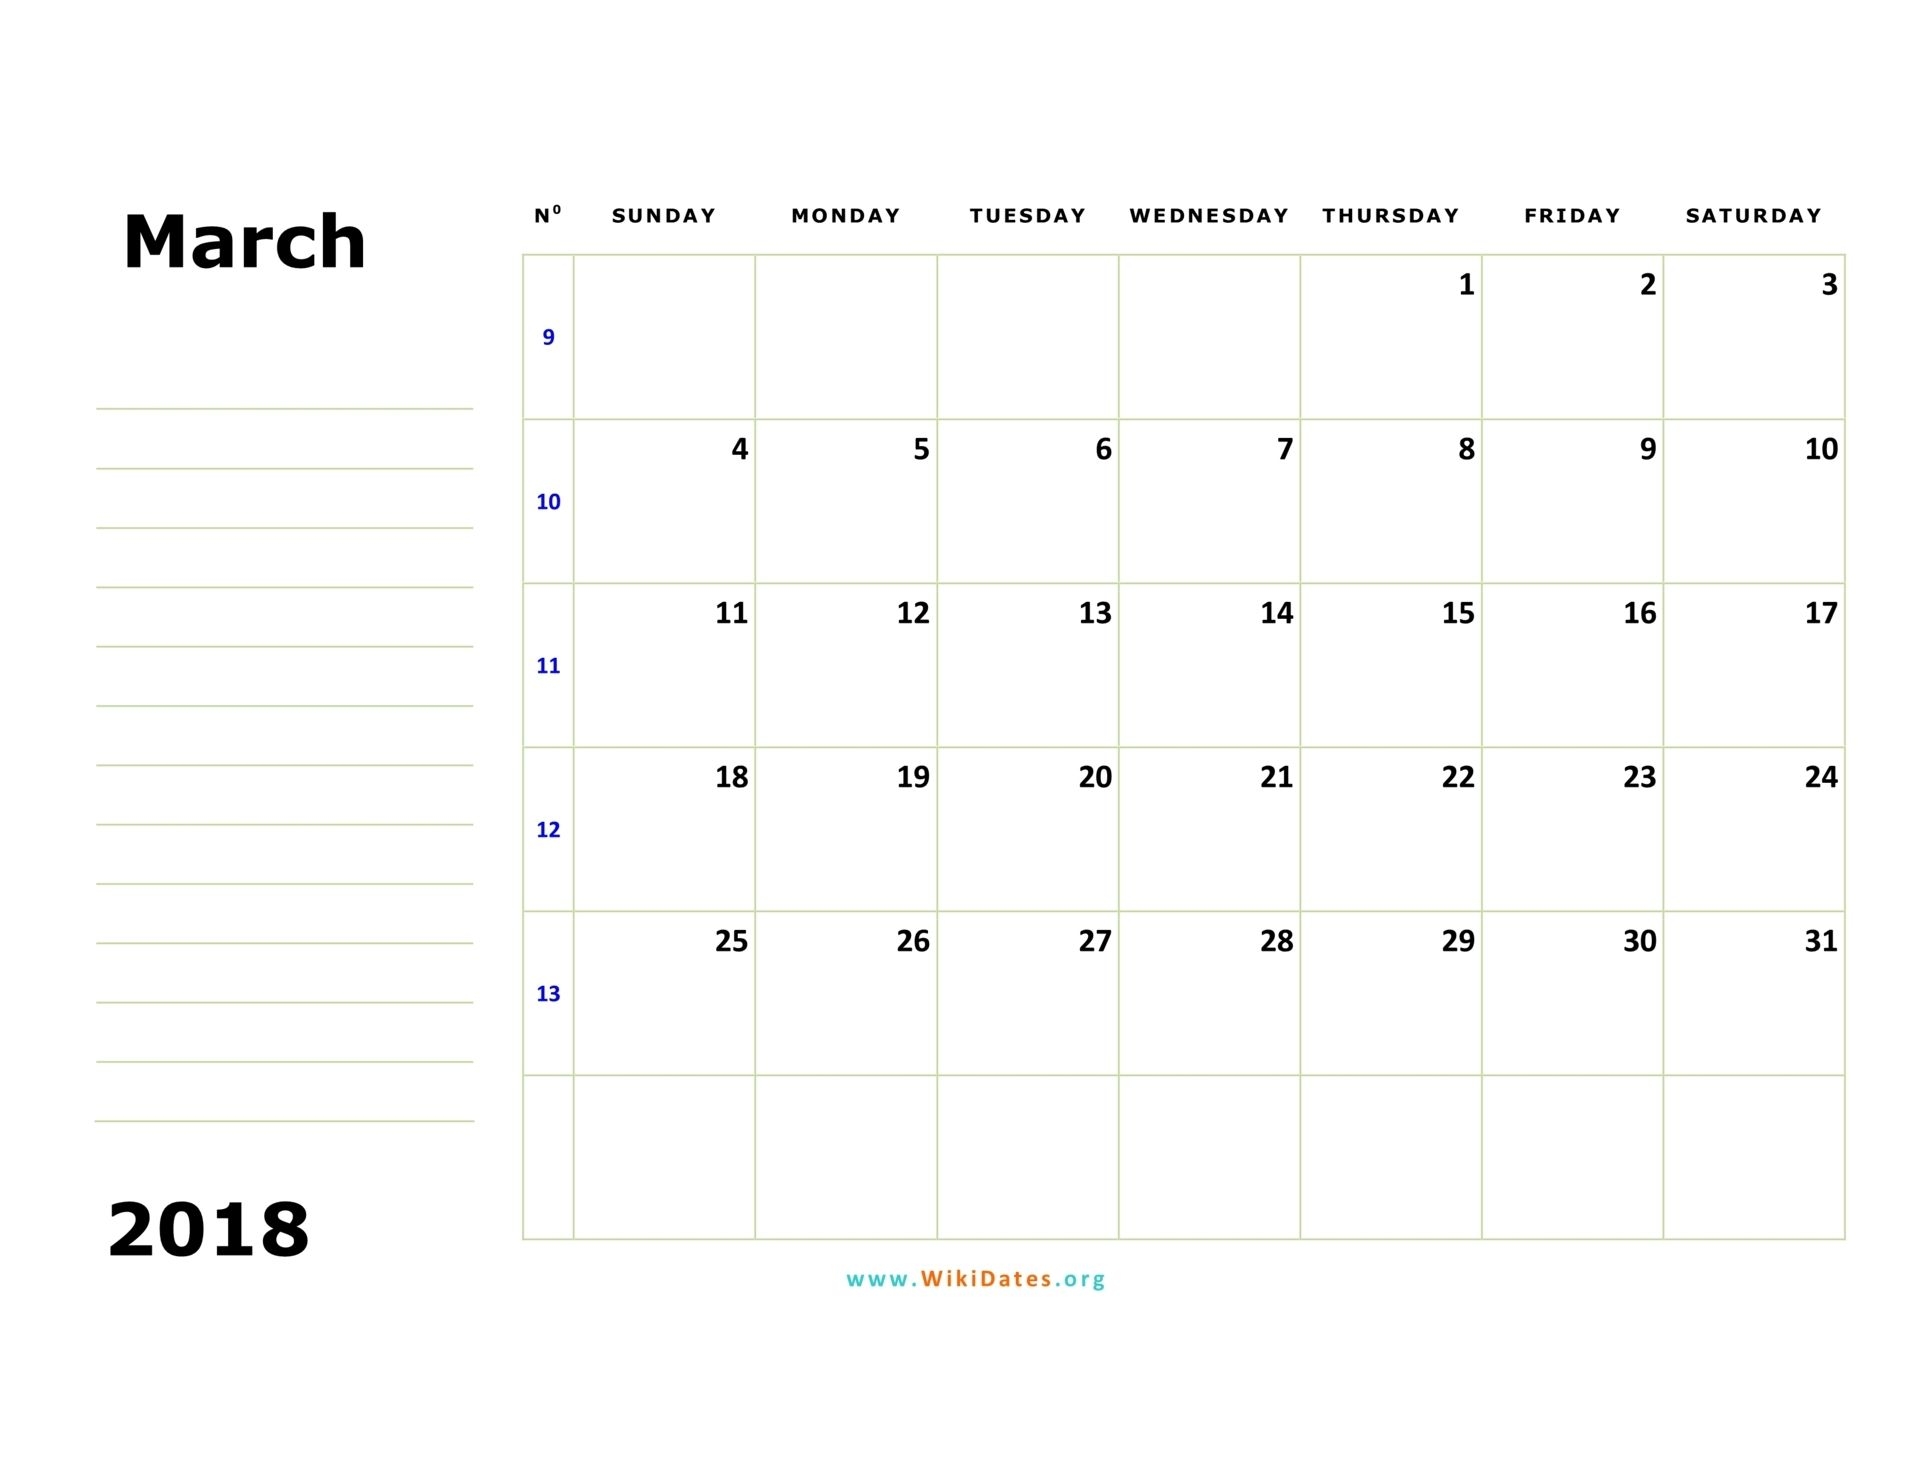 March 2018 Calendar | Wikidates